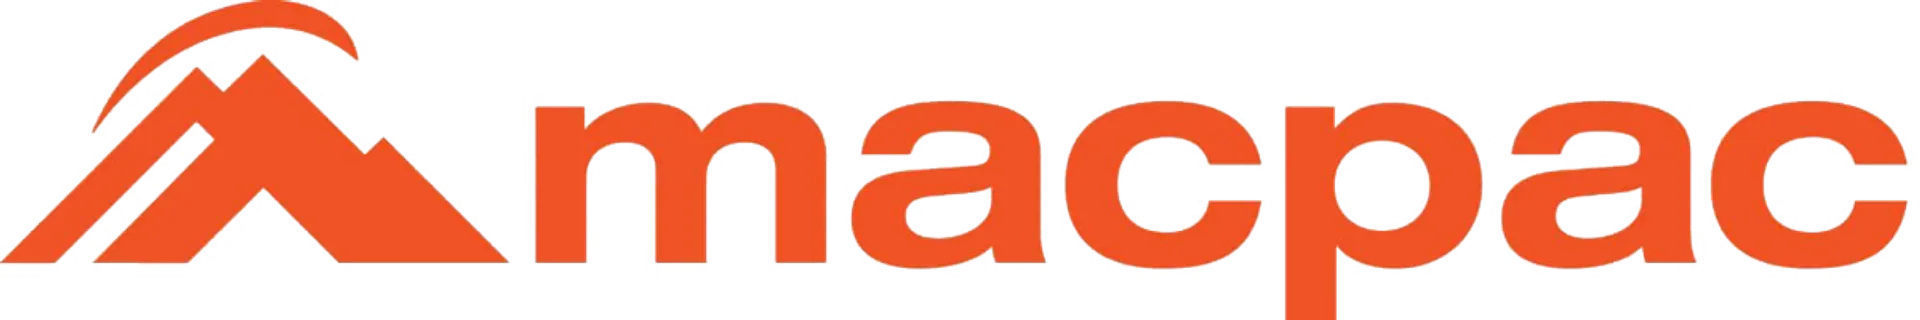 MACPAC logo